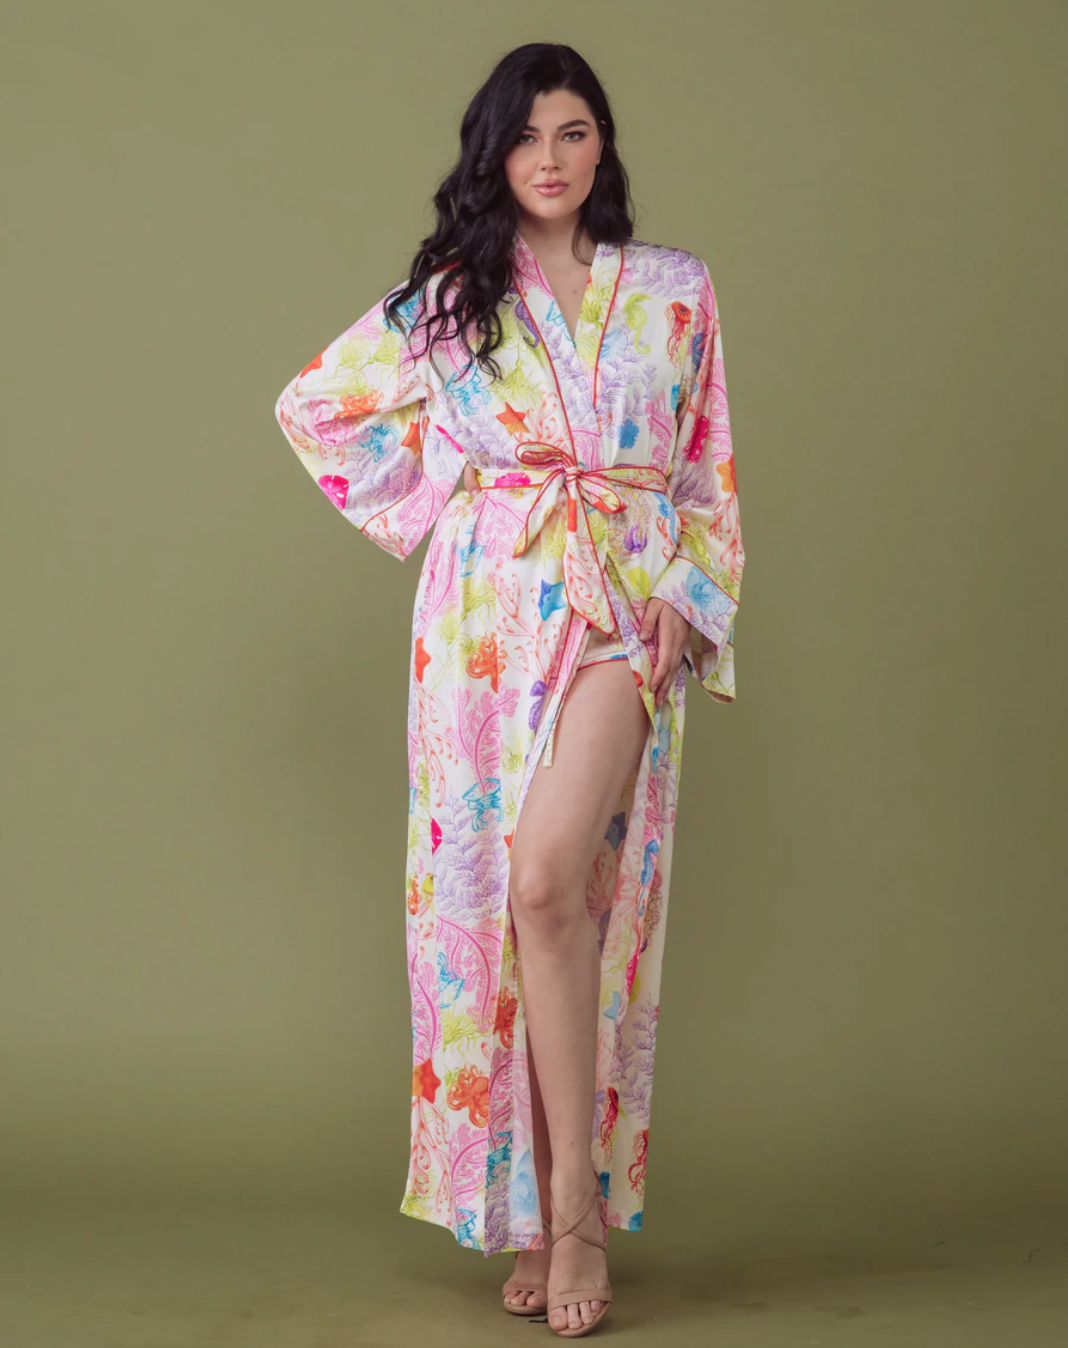 Kilo Brava satin robe with multicolored rainbow coral print. Mermaid lingerie.